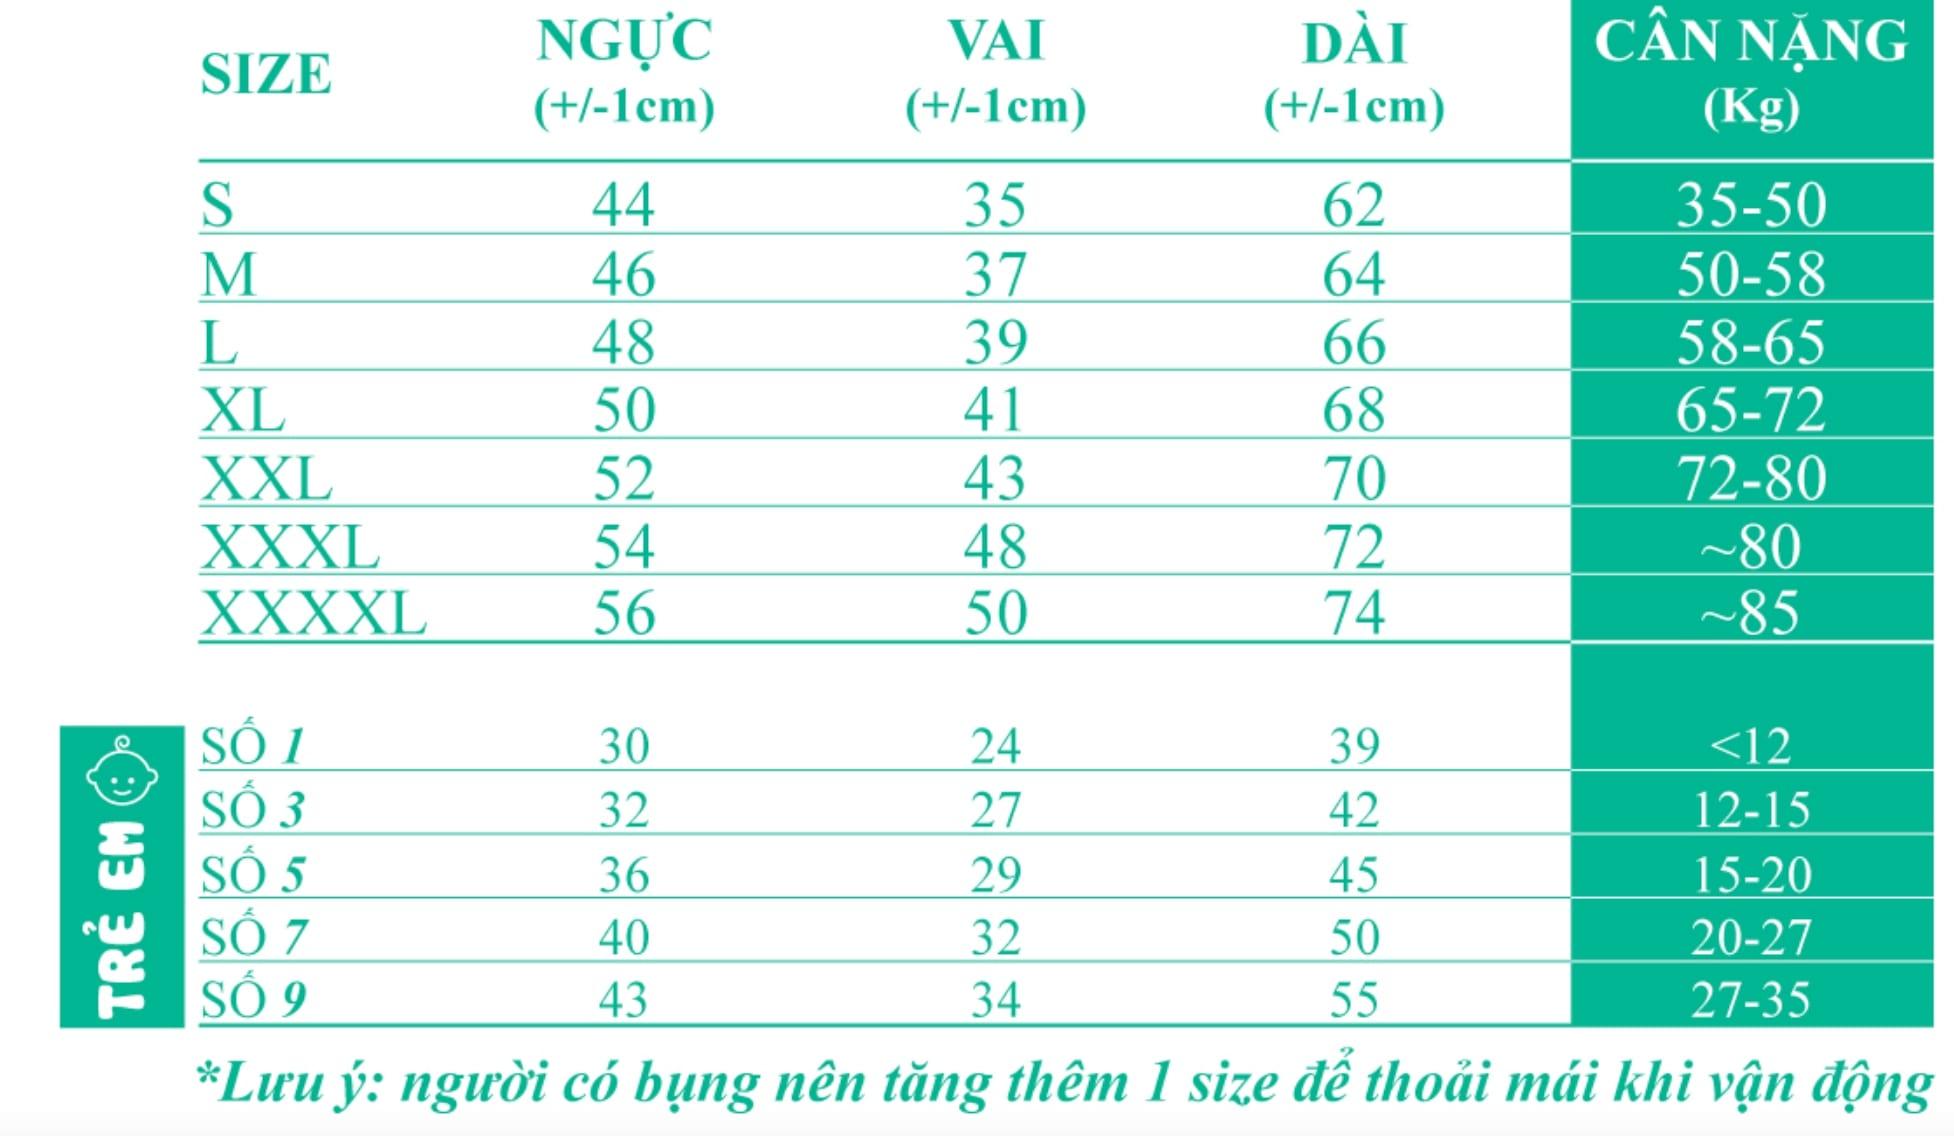 Bảng size của PRINTSTYLE Hồ Chí Minh (Ảnh BlogAnChoi)